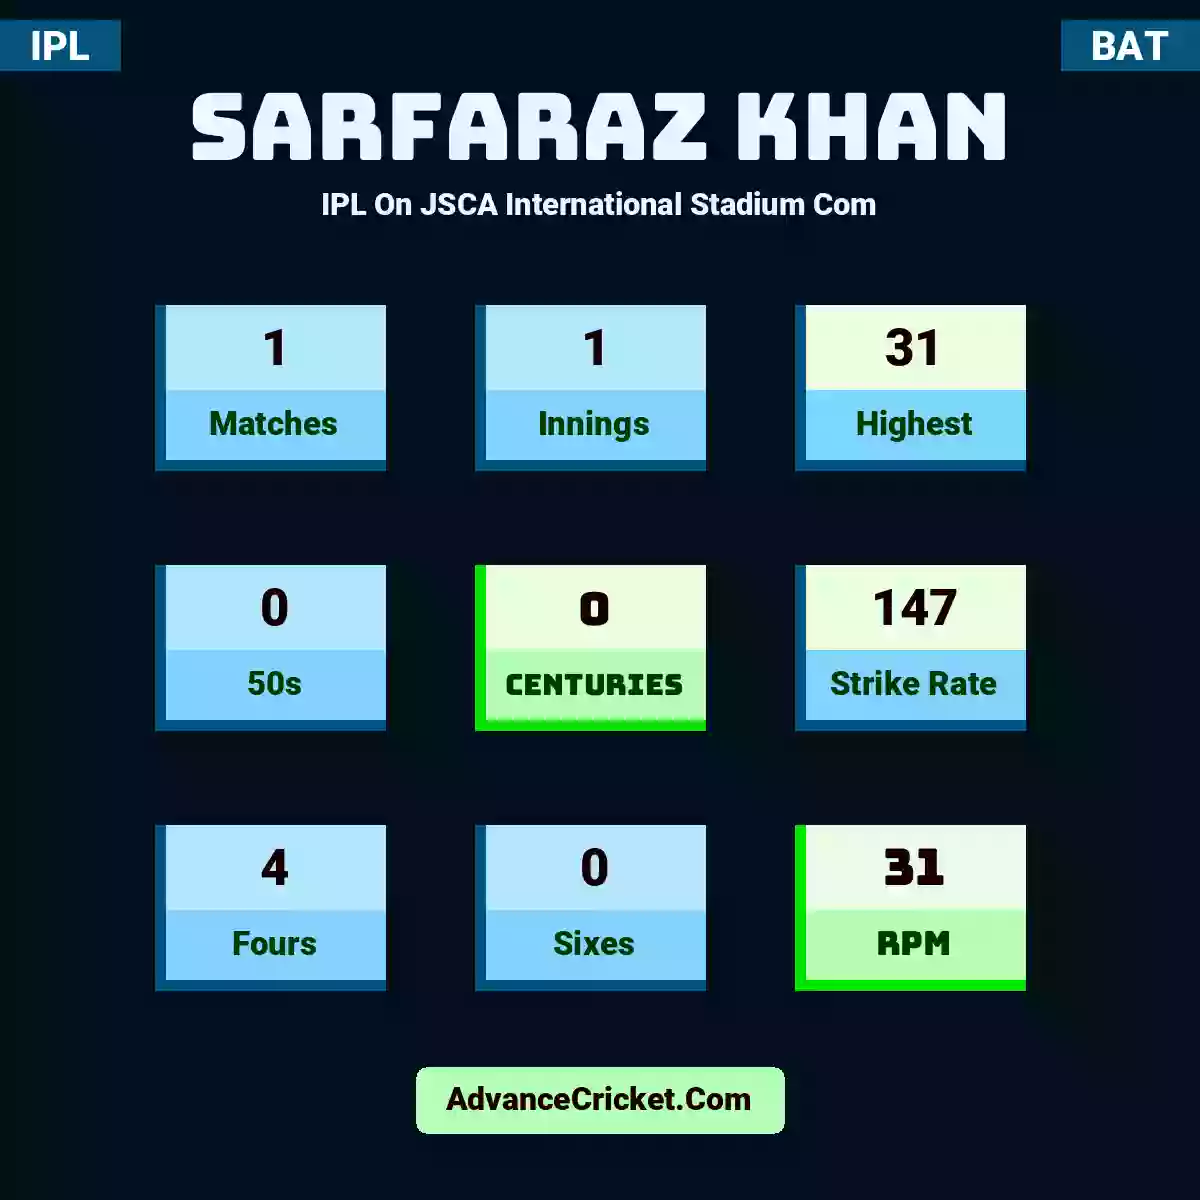 Sarfaraz Khan IPL  On JSCA International Stadium Com, Sarfaraz Khan played 1 matches, scored 31 runs as highest, 0 half-centuries, and 0 centuries, with a strike rate of 147. S.Khan hit 4 fours and 0 sixes, with an RPM of 31.